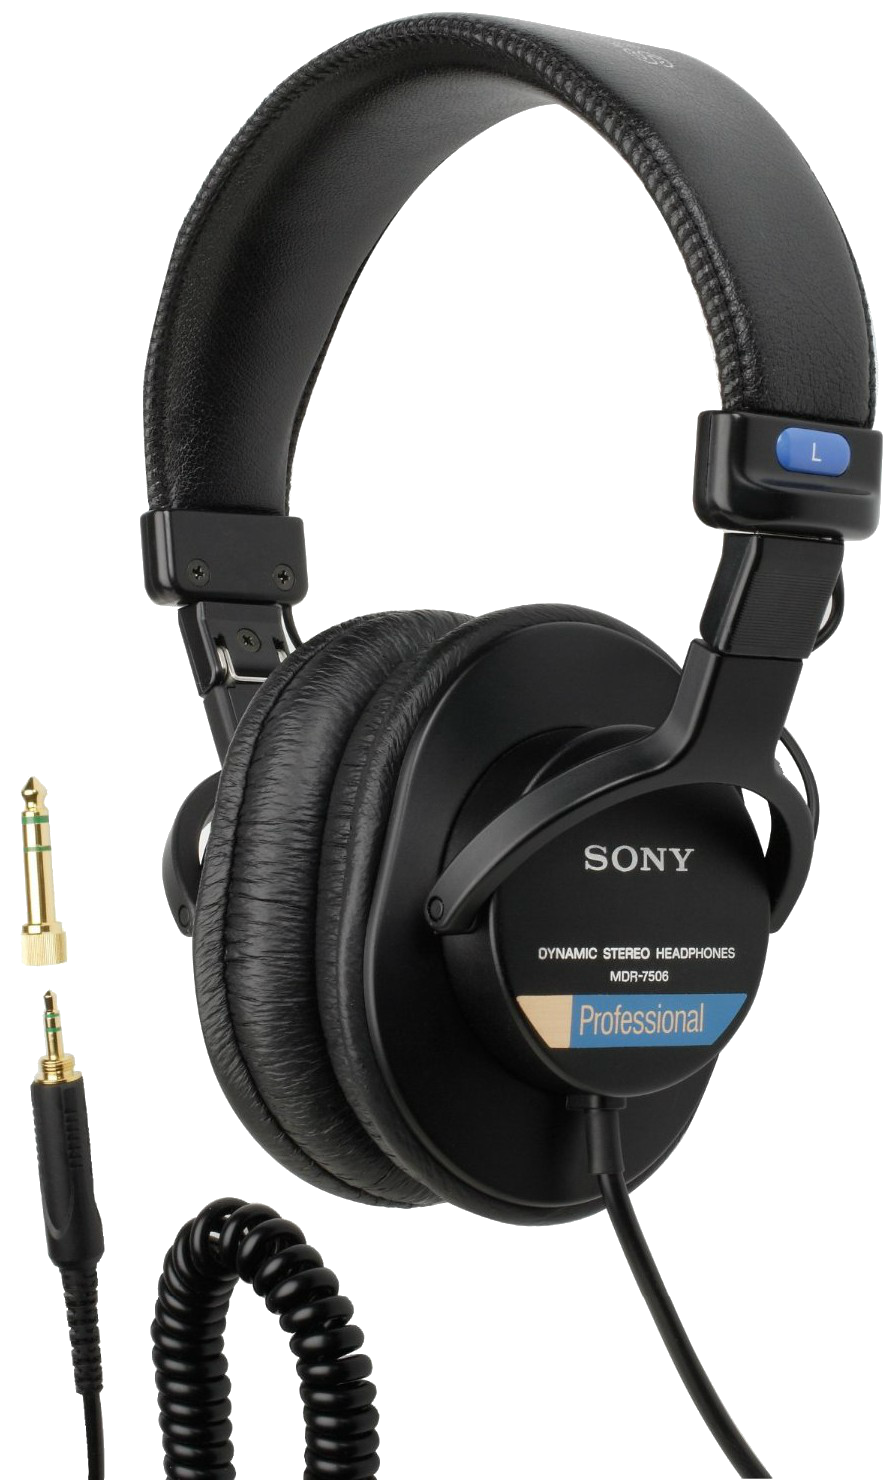 Sony 7506 купить. Sony MDR-7506. Наушники Sony MDR-7506/1. Sony professional MDR 7506. Мониторные наушники Sony MDR 7506.